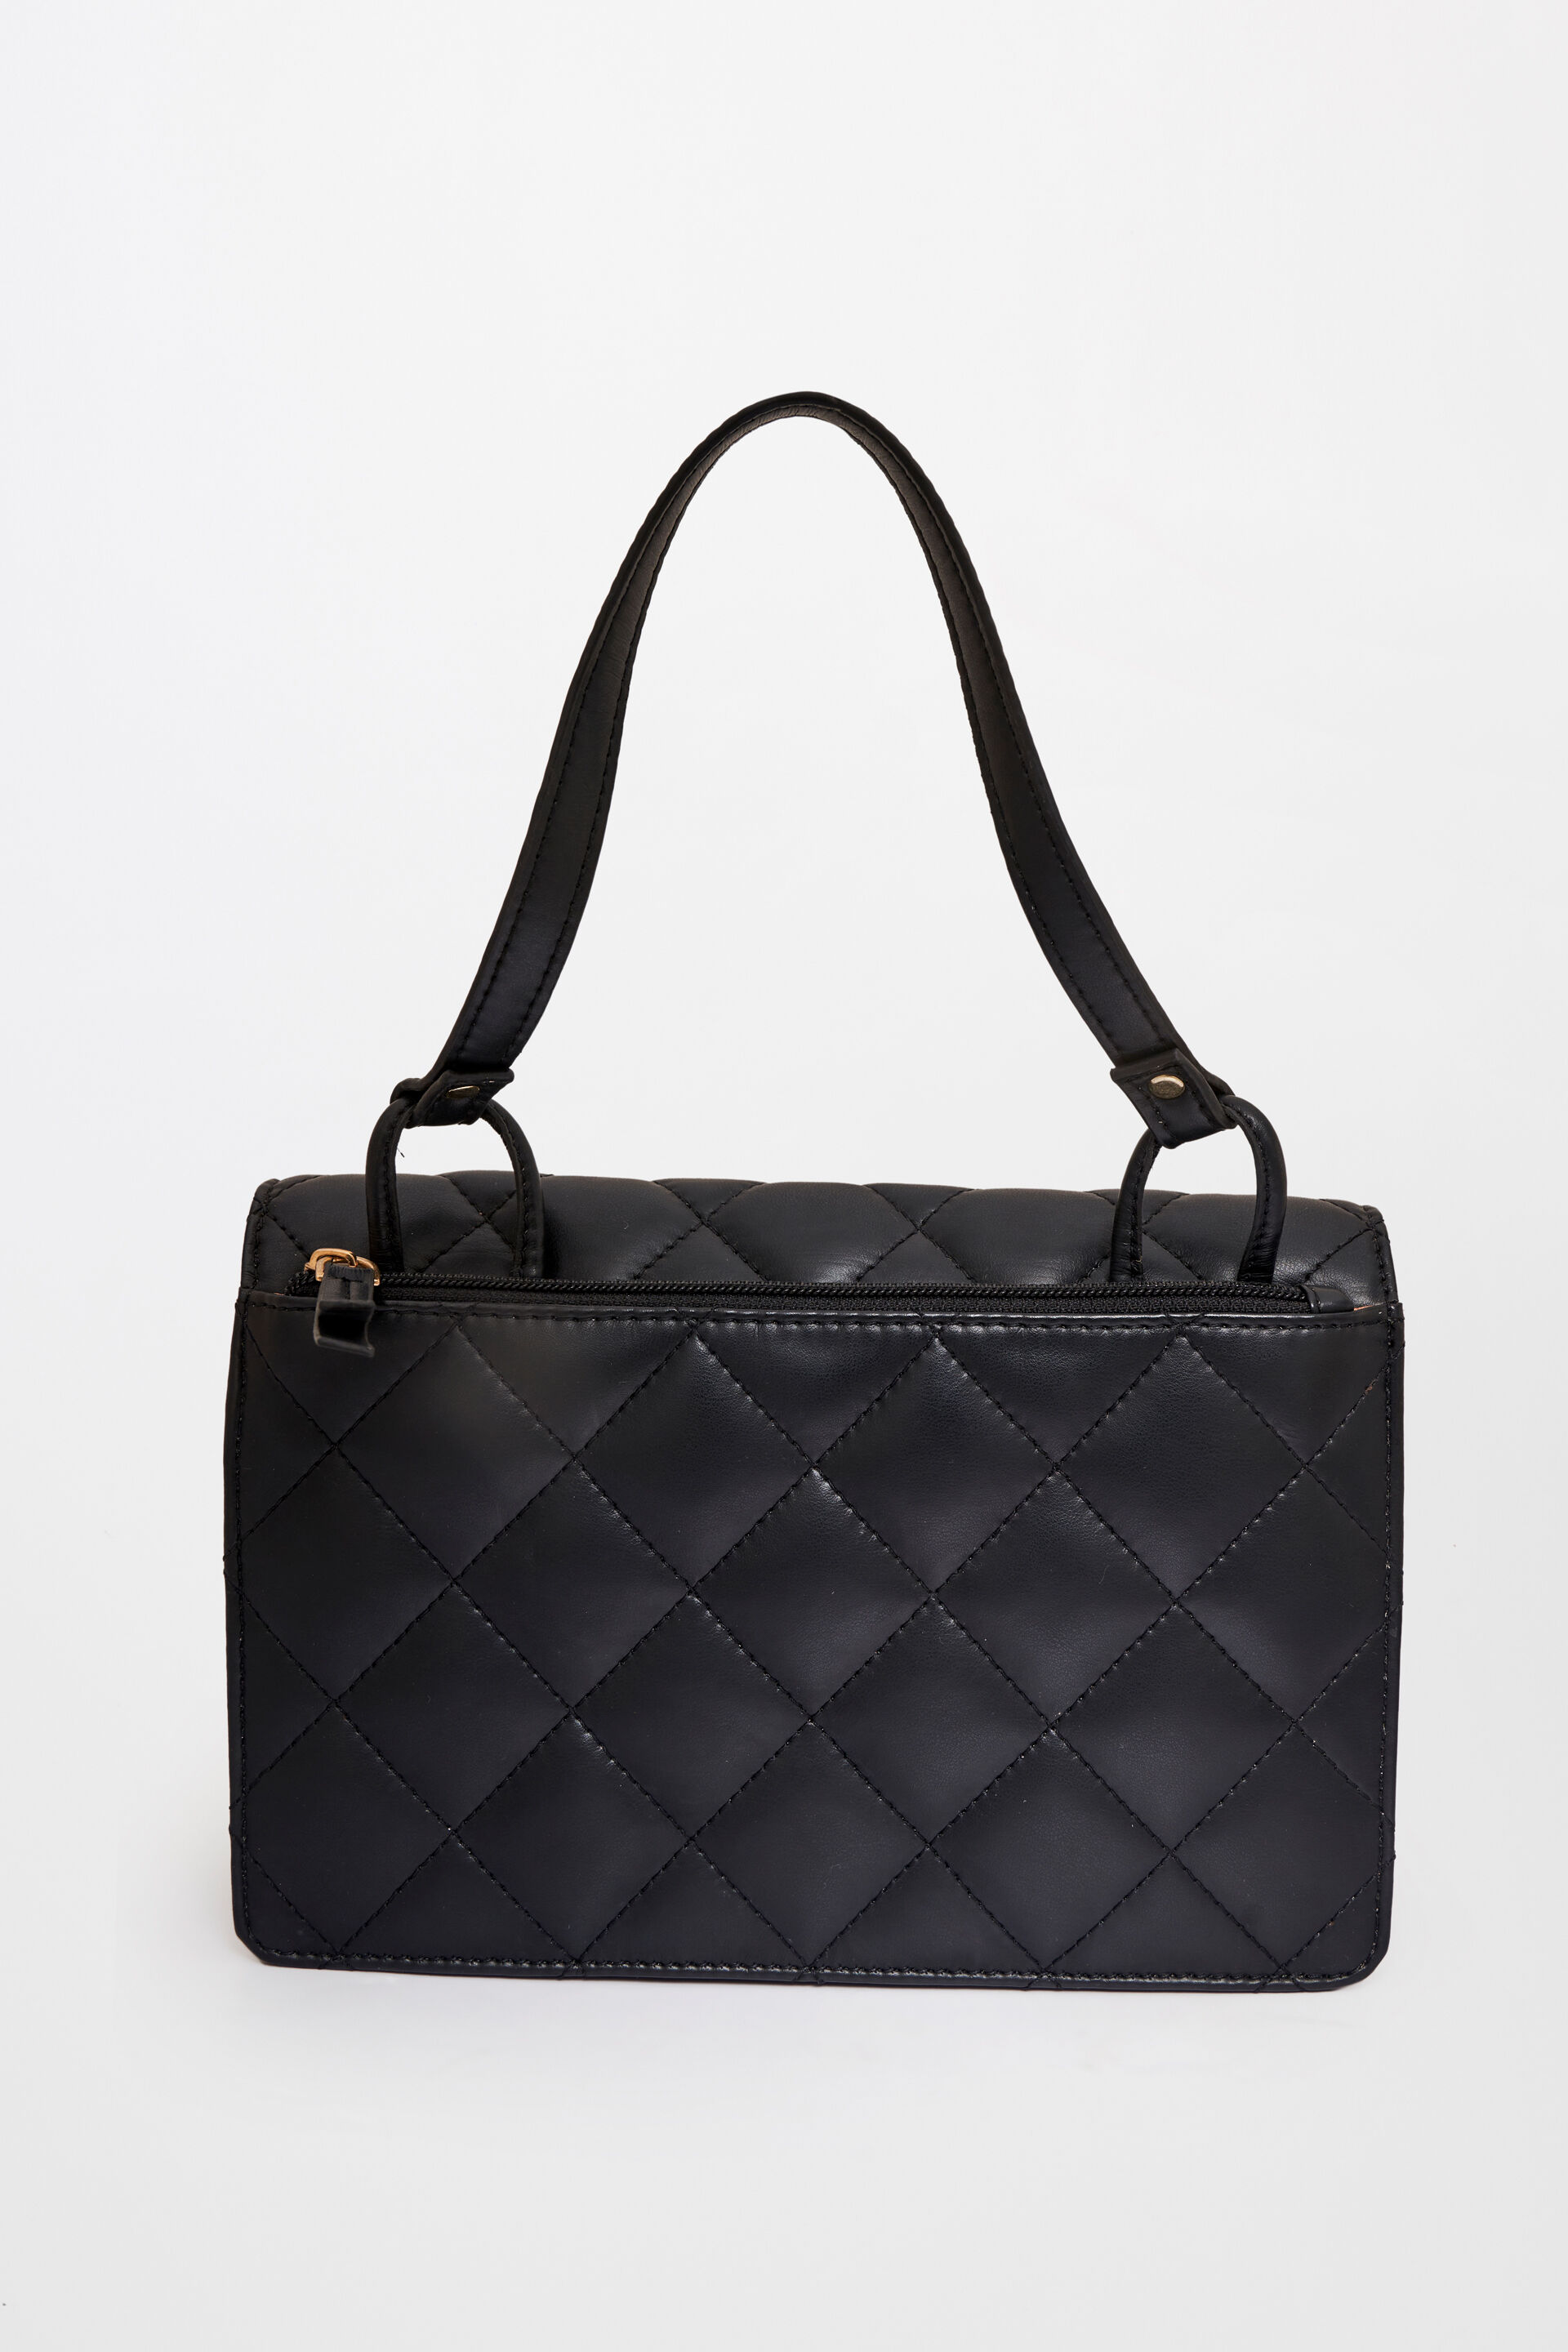 Purses And Handbags For Women Shoulder Bag Tote Purse Messenger Satchel For  Ladies (Black) - Walmart.com